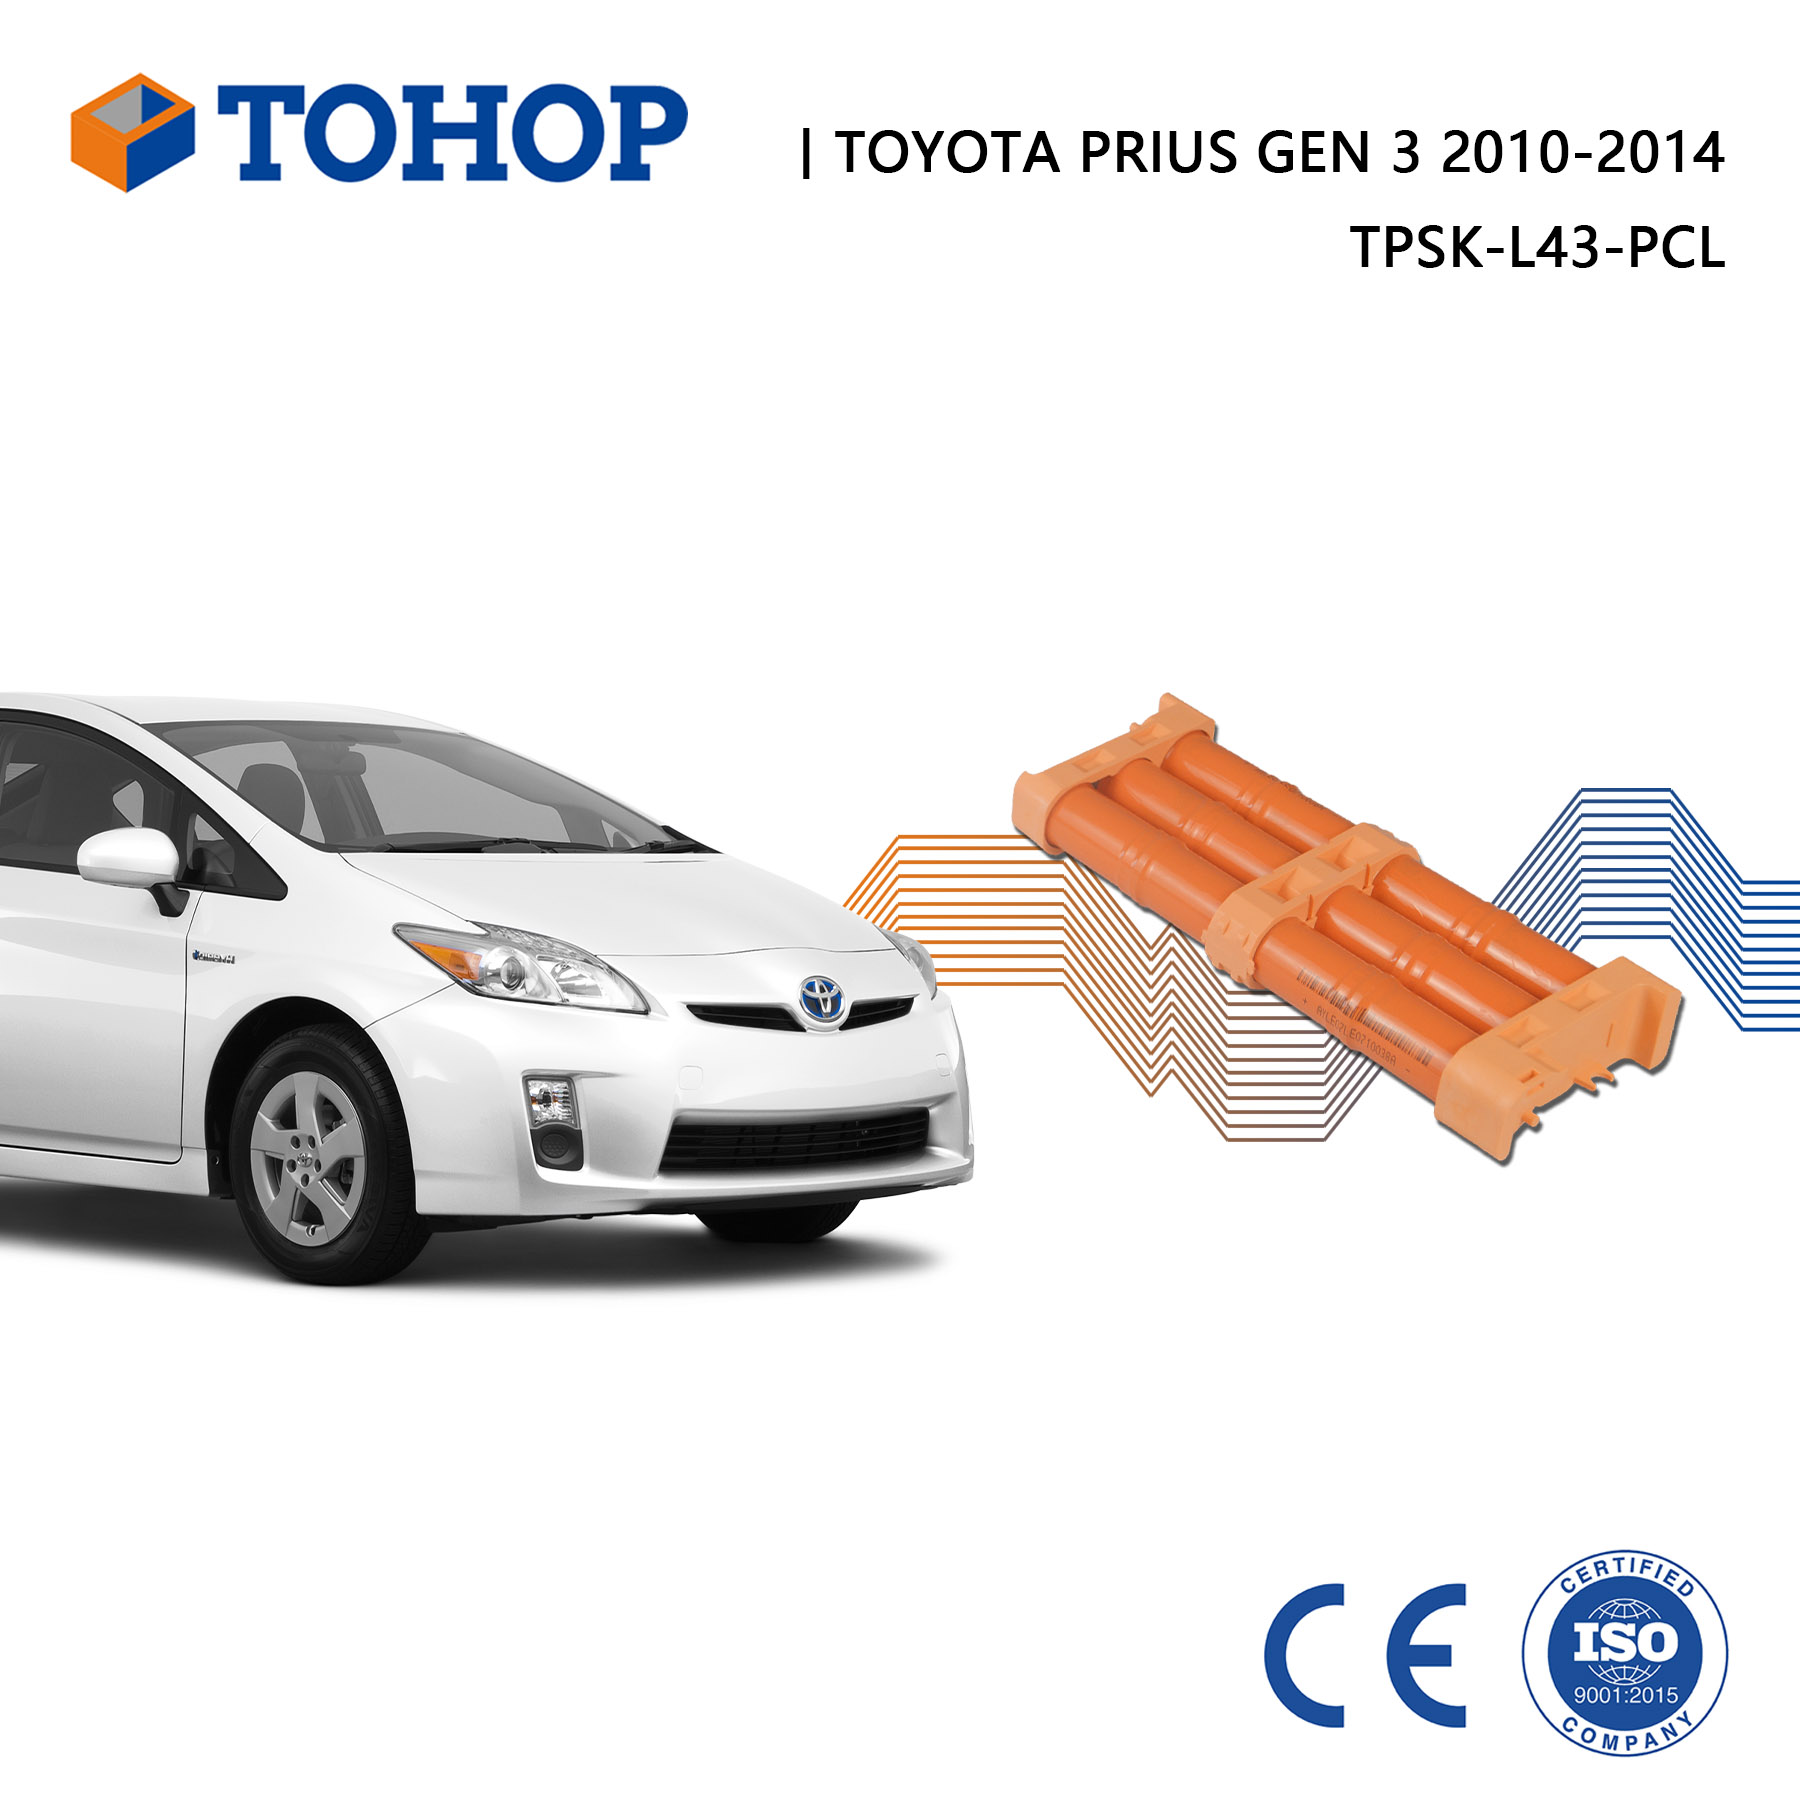 Batteria per auto ibrida Prius Gen 3 2014 nuovissima per Toyota